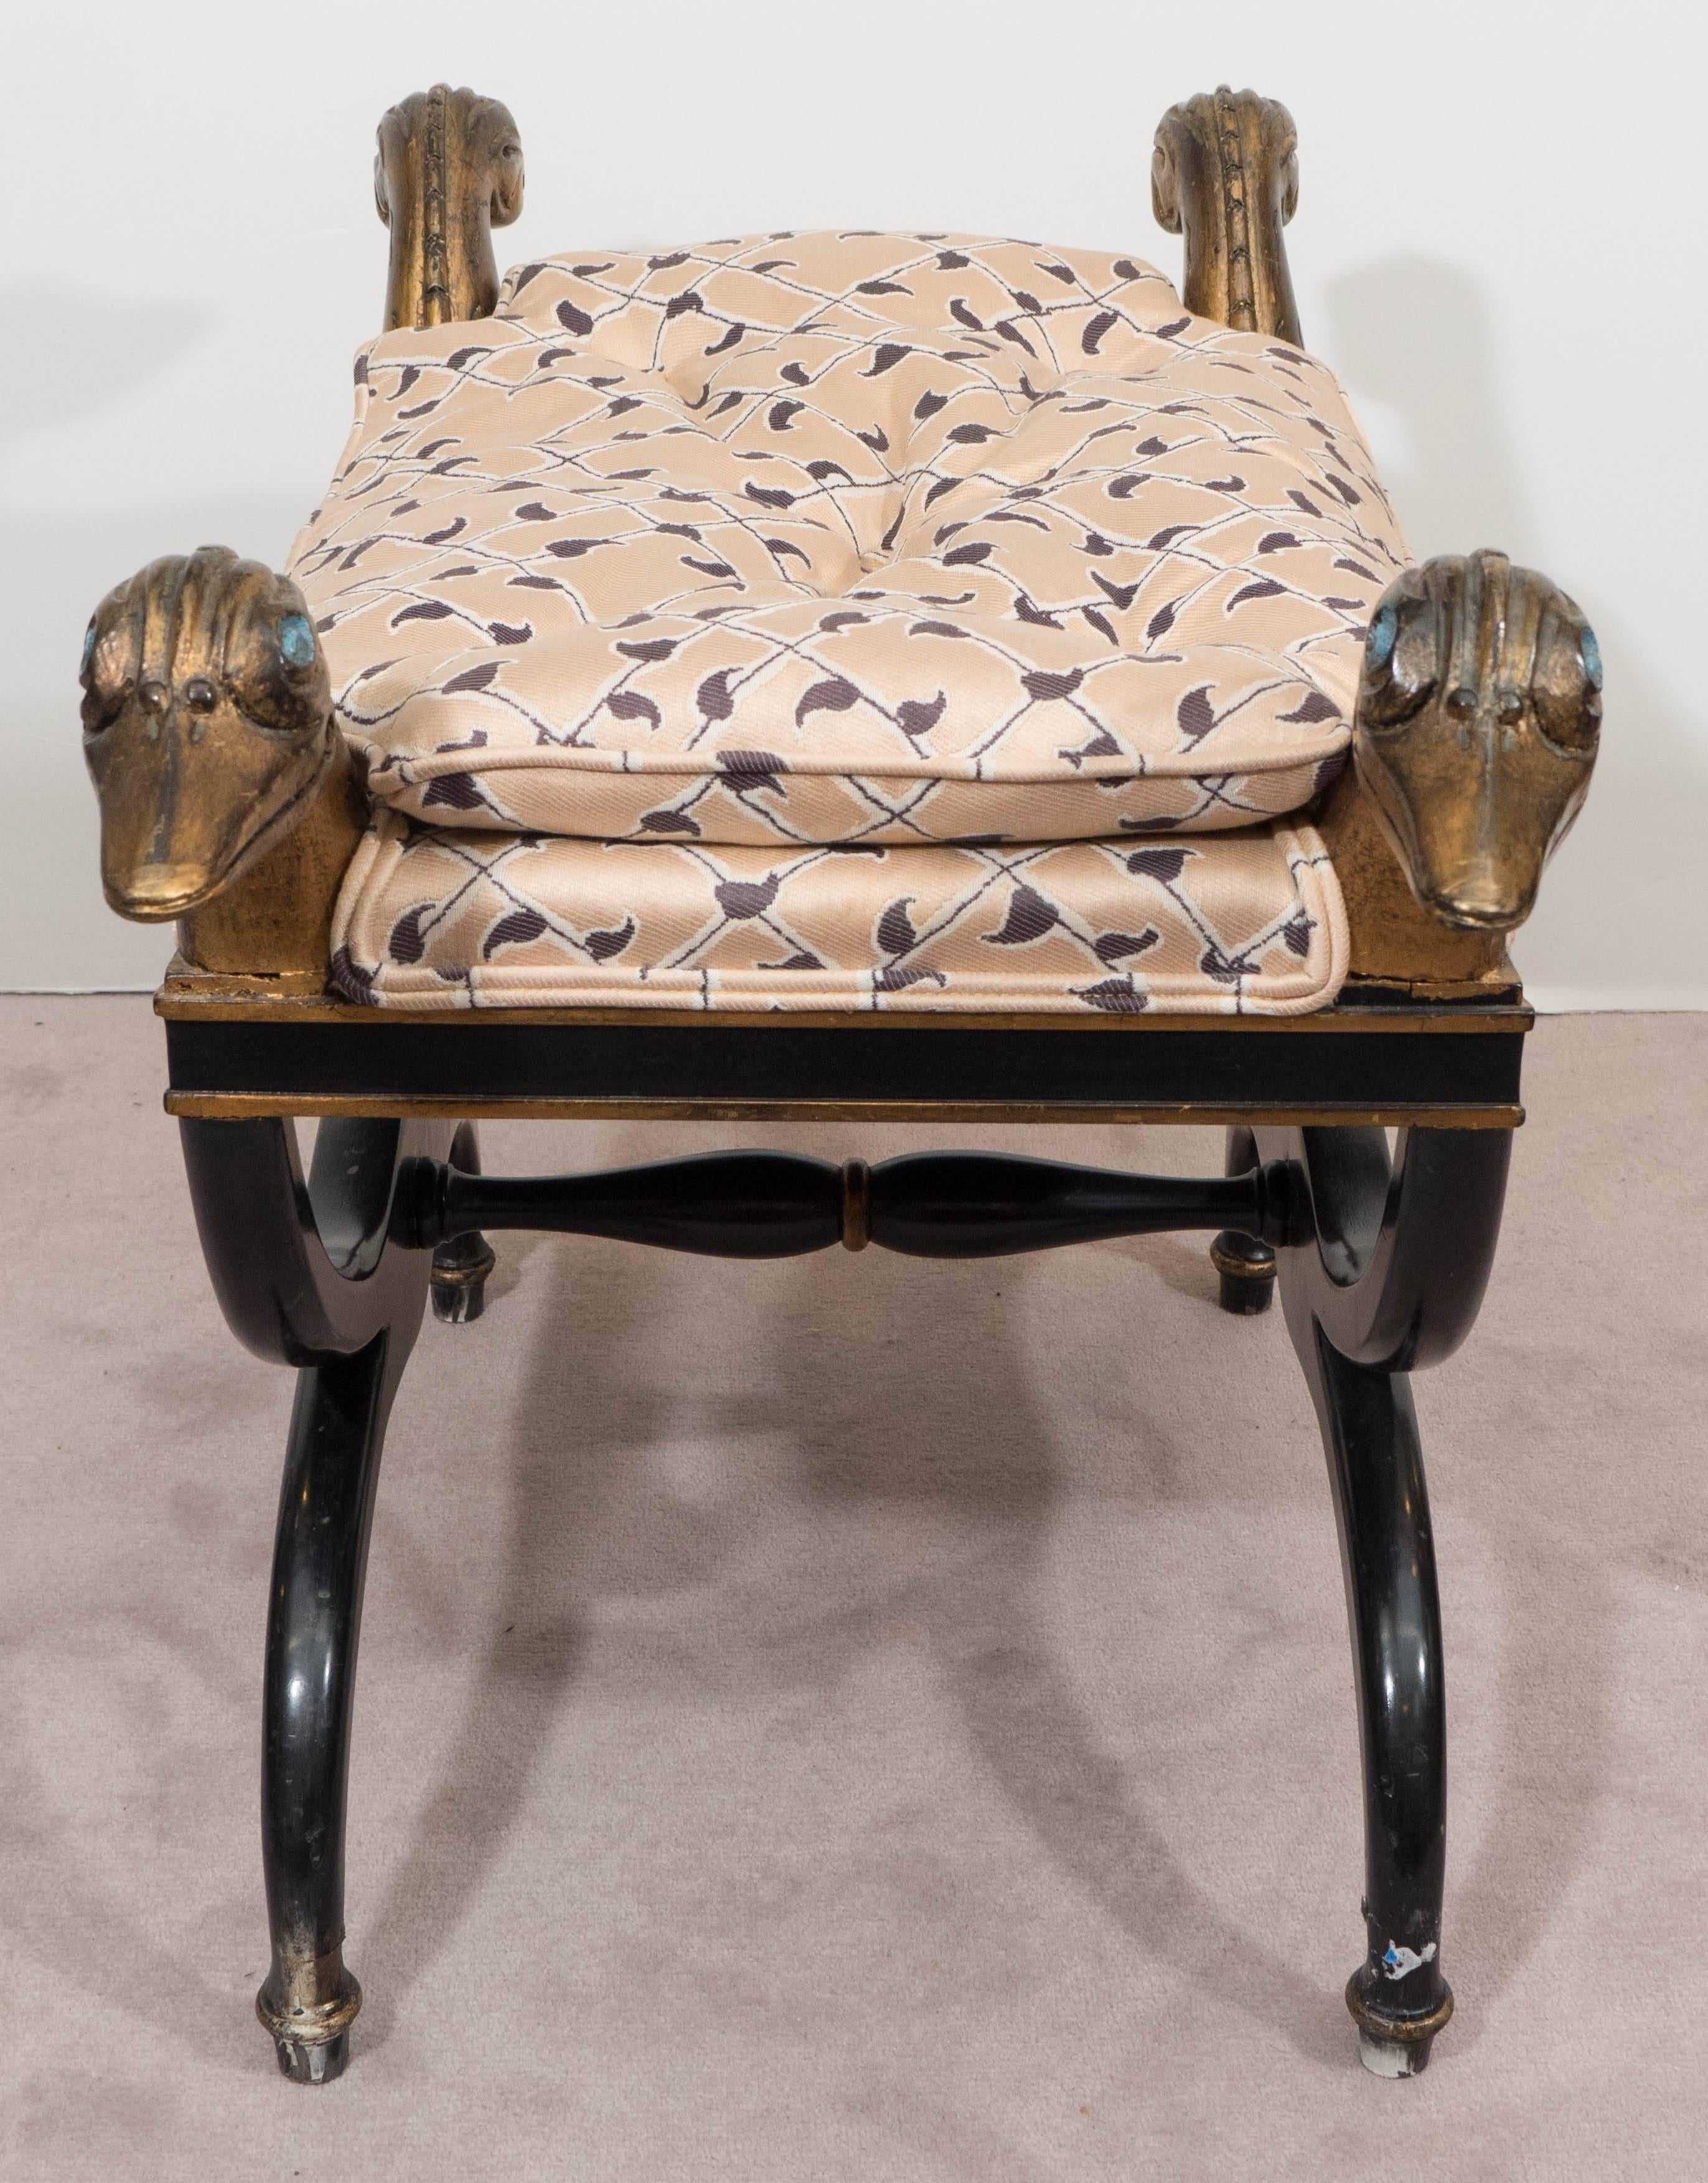 20th Century Regency Style Curule Bench with Swan Motif